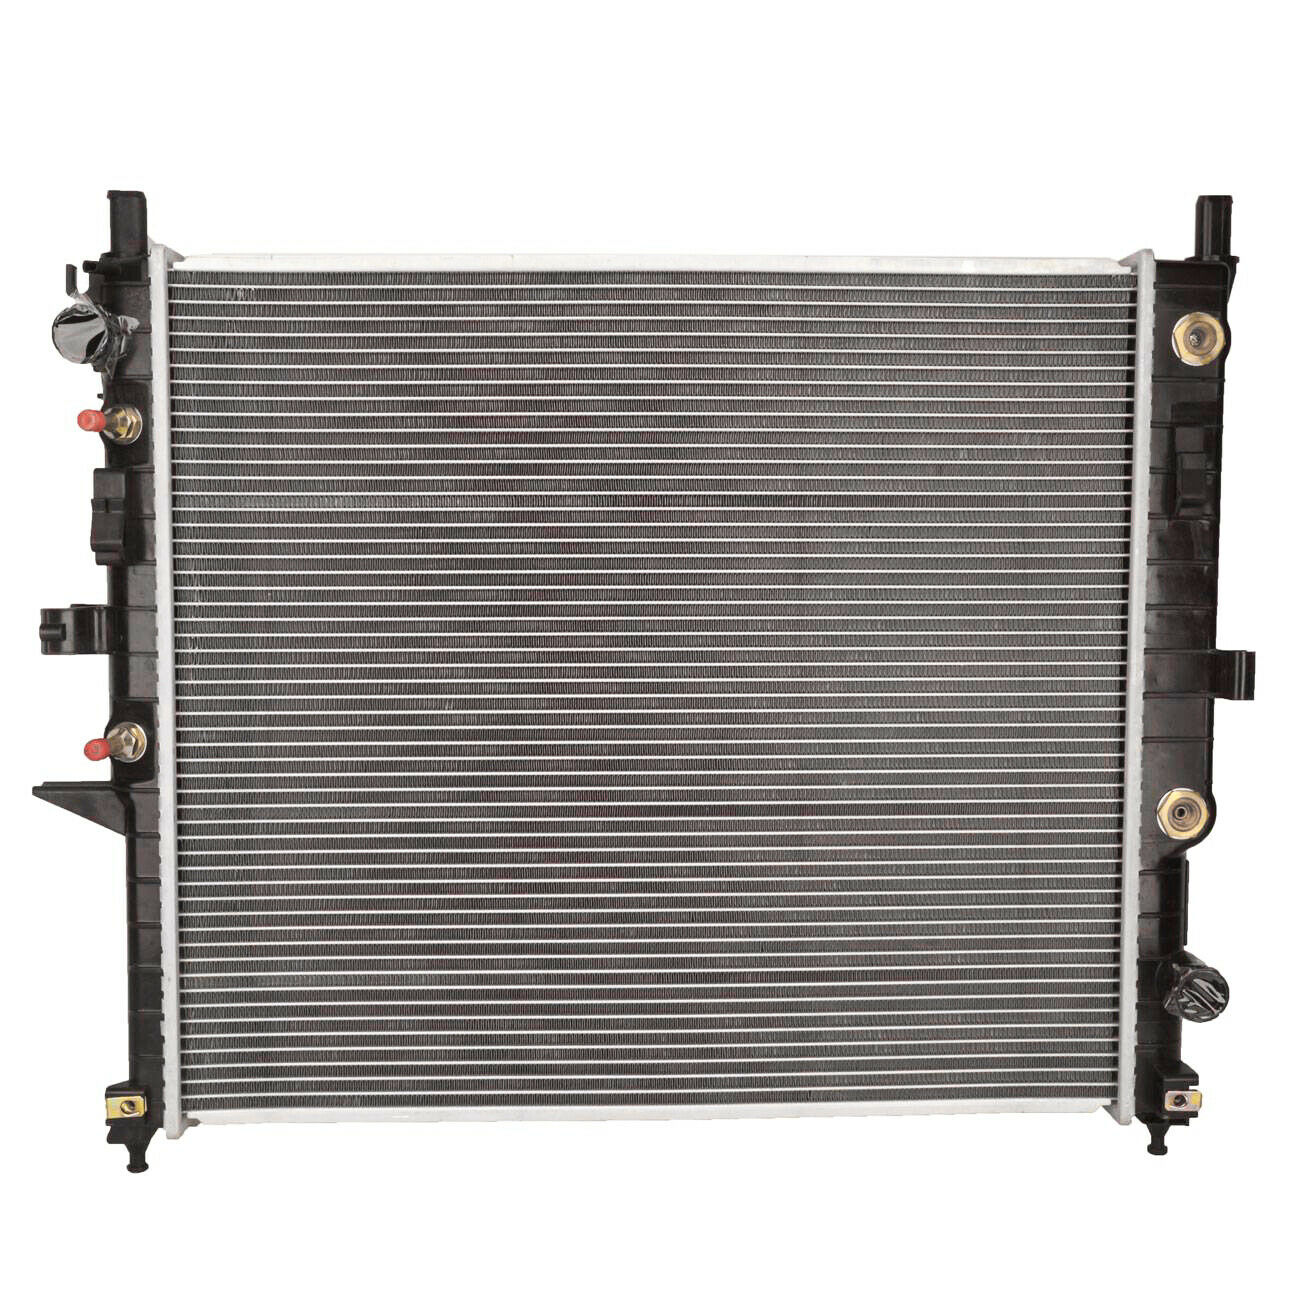 Engine Cooling Radiator for Mercedes W163 ML230 ML320 ML350 ML430 ML55 AMG